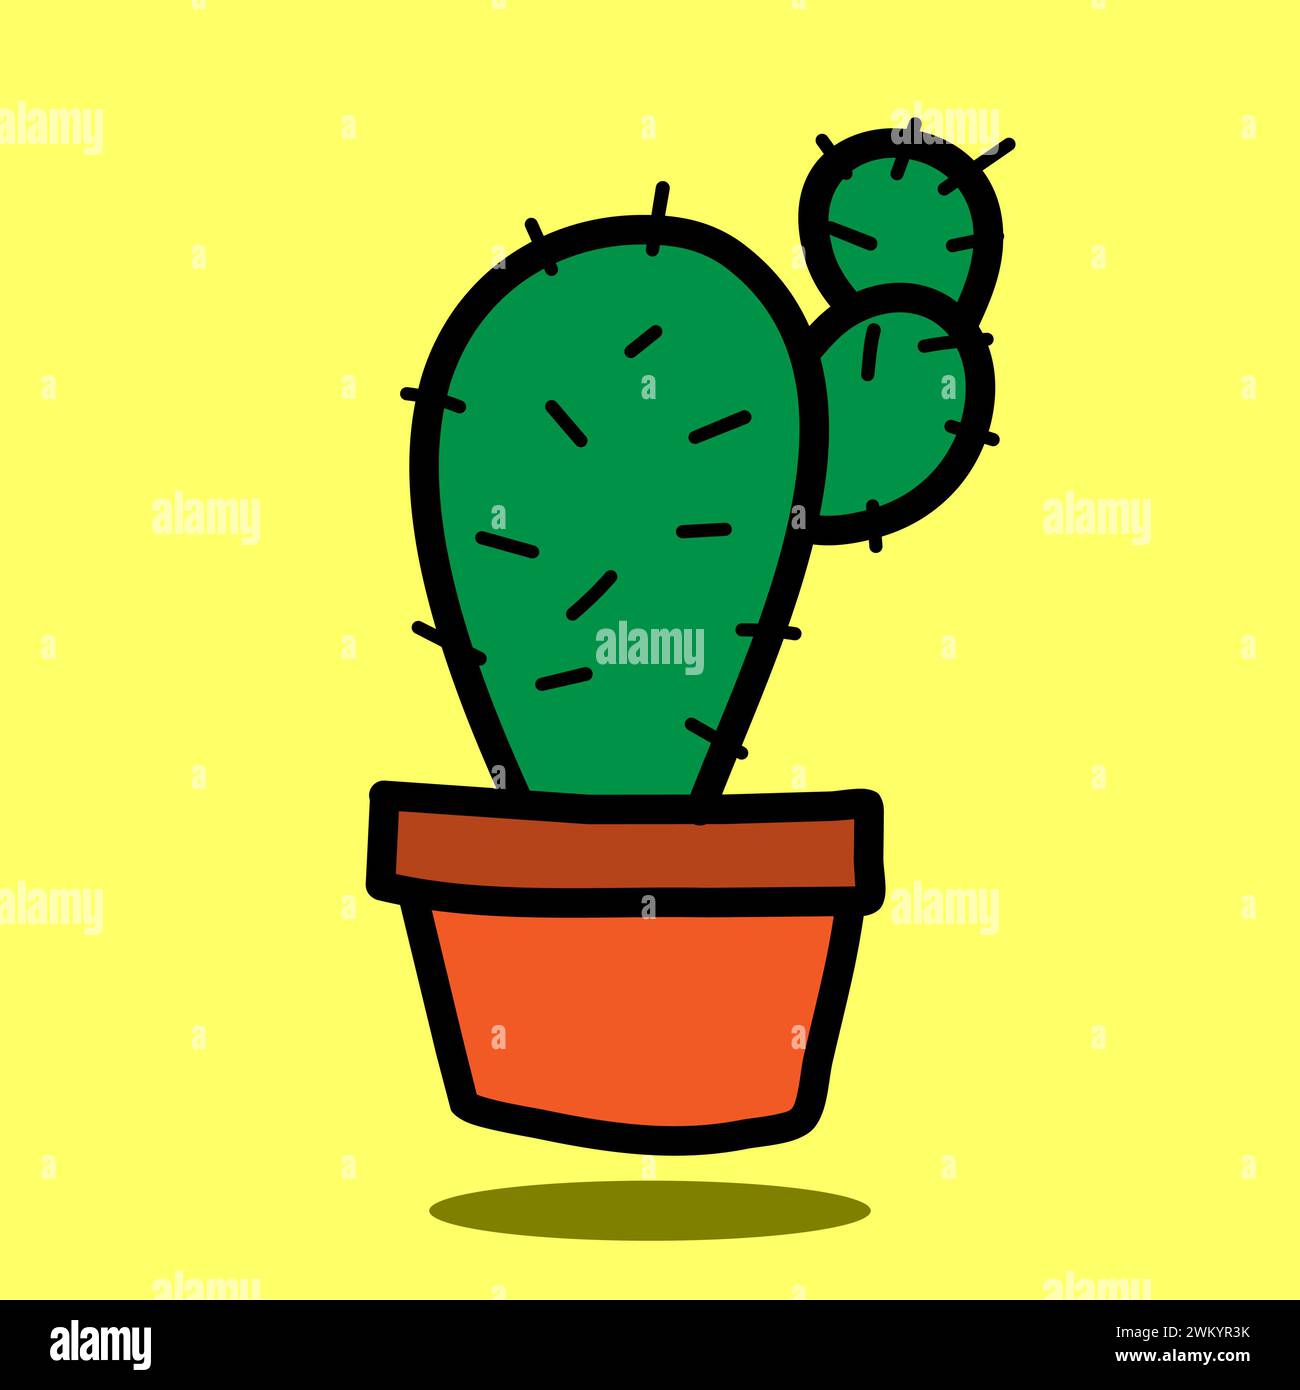 art illustration design of cactus Stock Vector